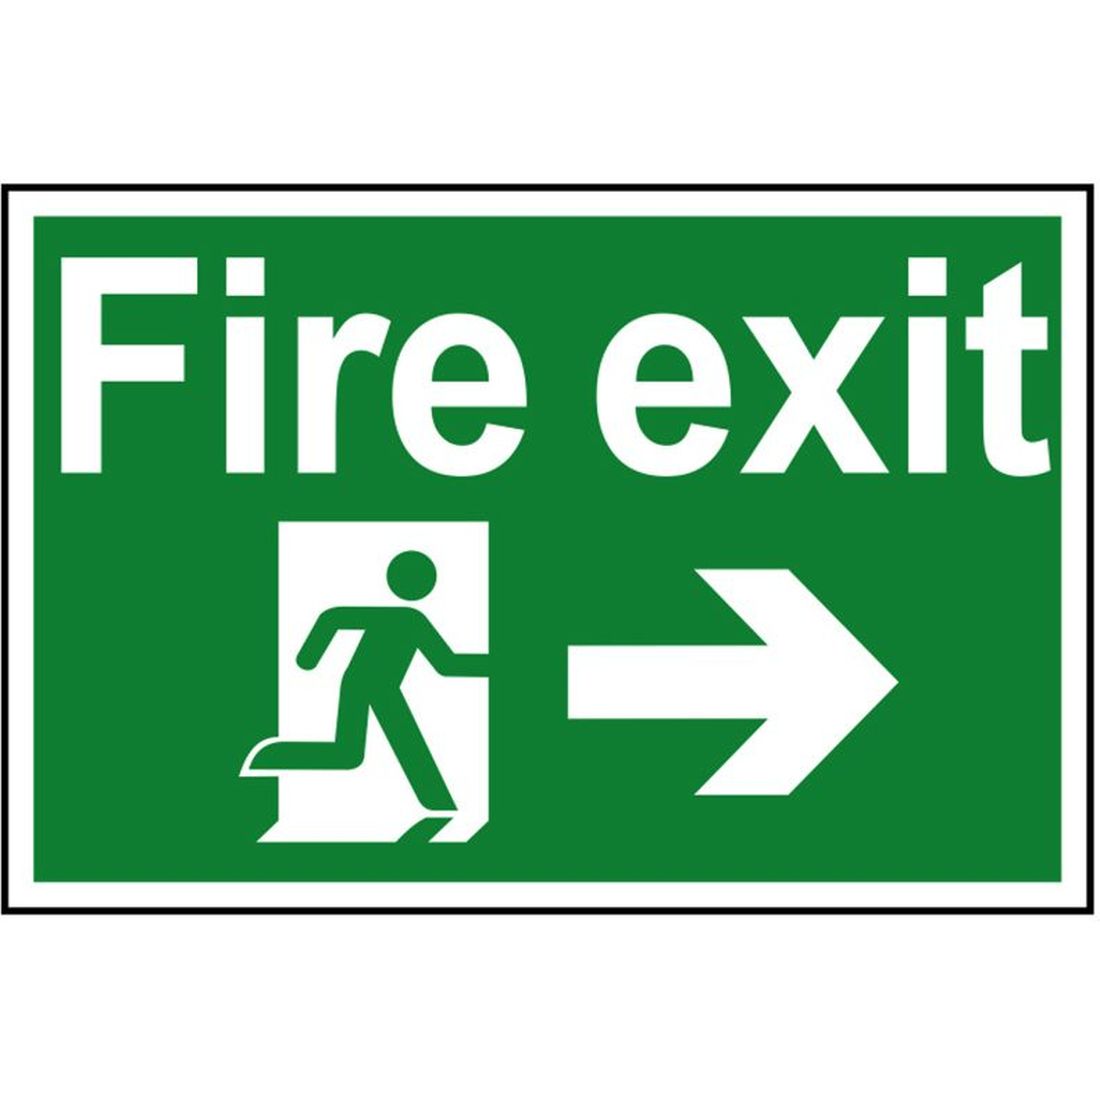 Scan Fire Exit Running Man Arrow Right - PVC 300 x 200mm                             